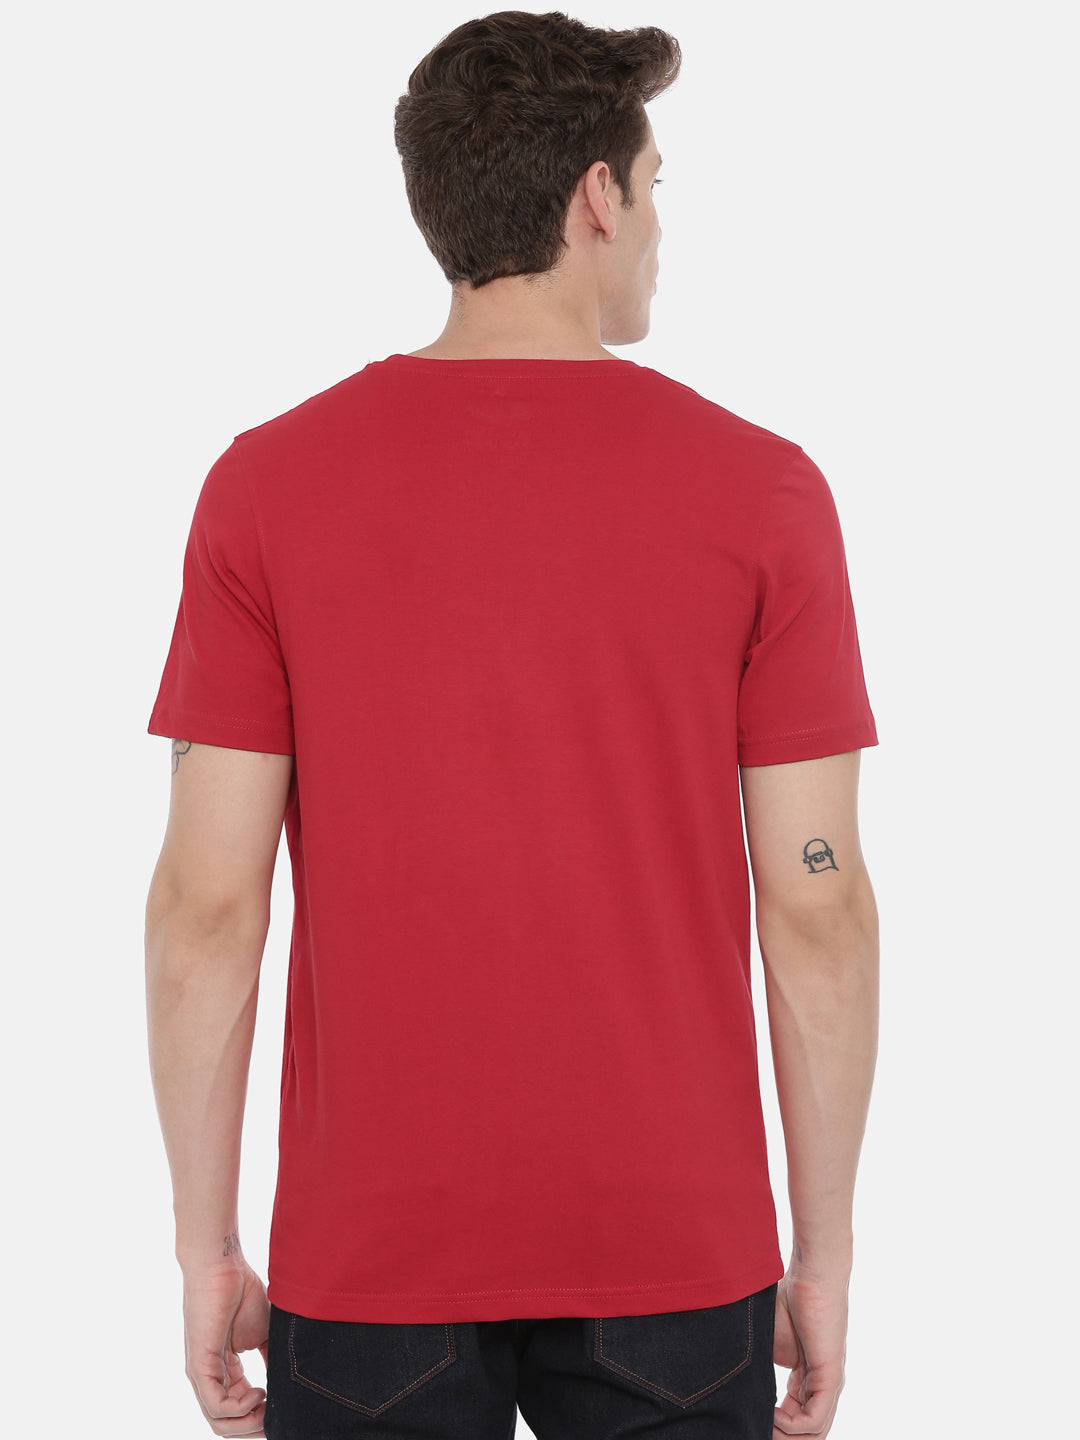 High Standard T-Shirt Graphic T-Shirts Bushirt   